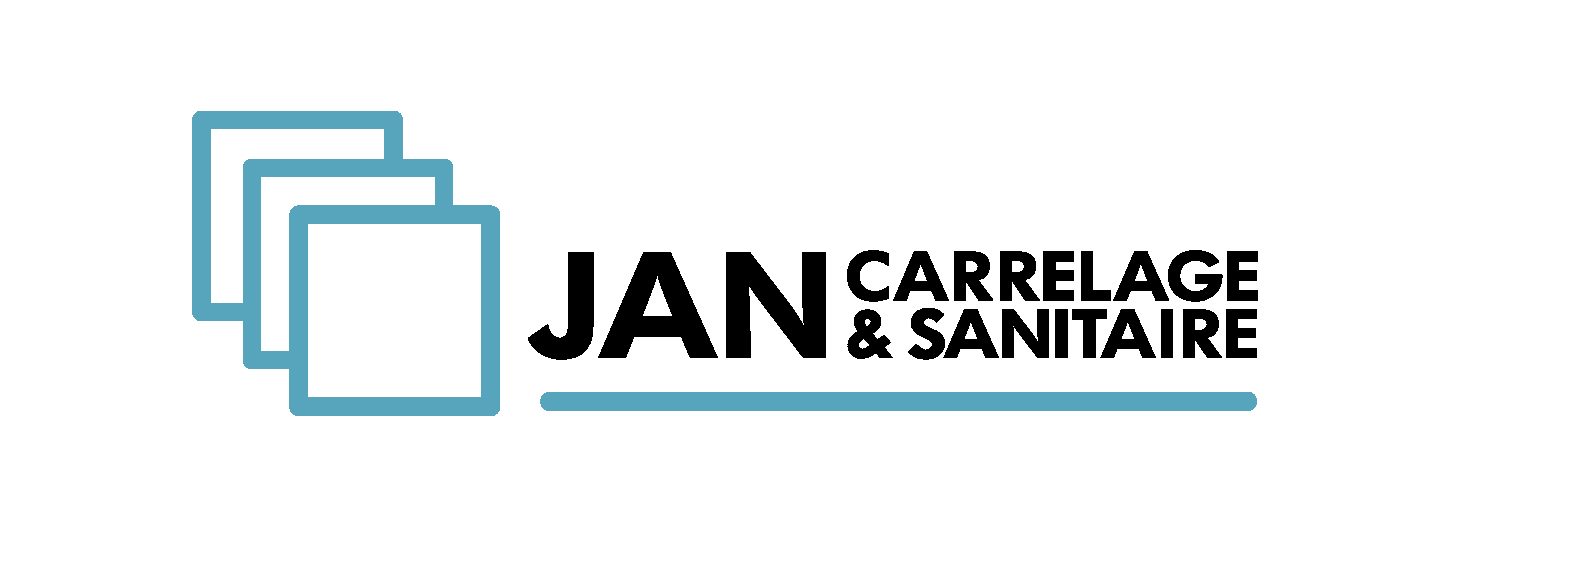 JAN Carrelage & Sanitaire